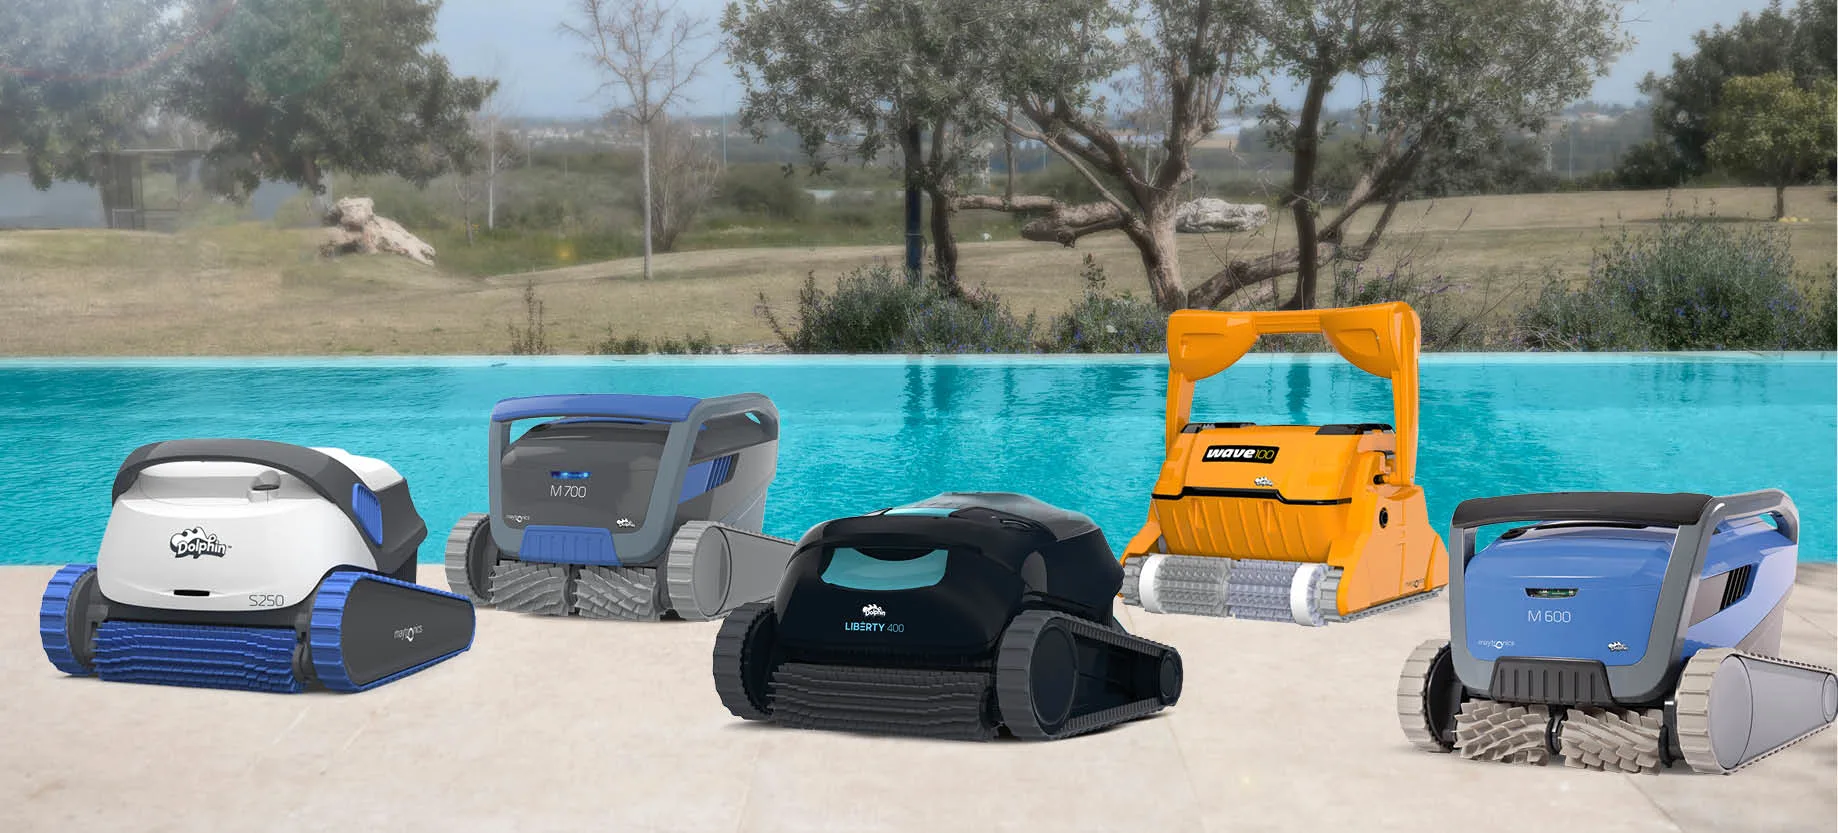 Dolphin robotic pool cleaners design versatility